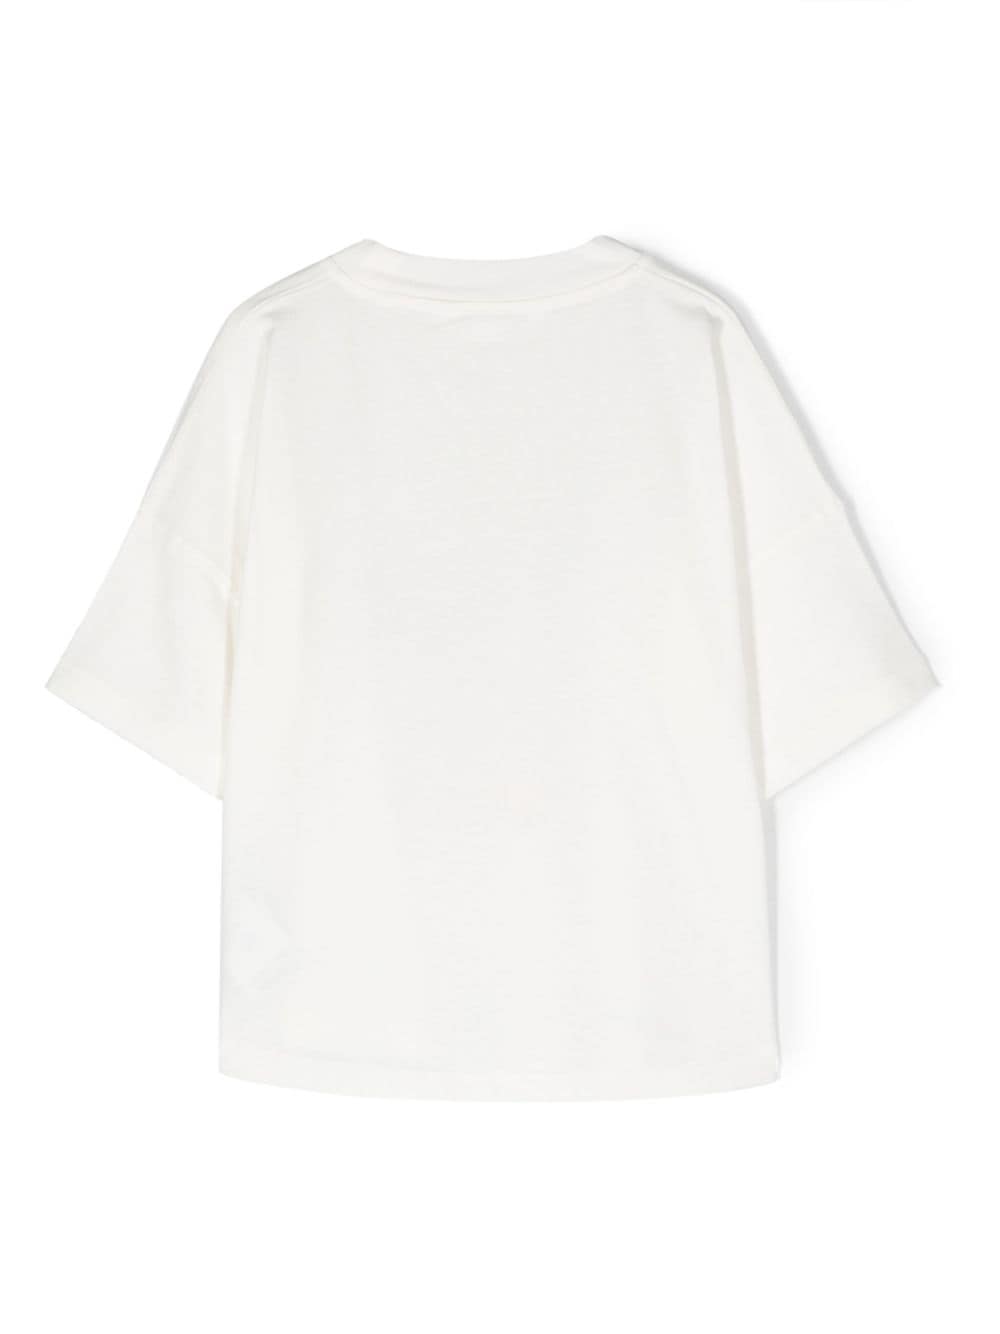 T-shirt bianca per bambino con stampa palme